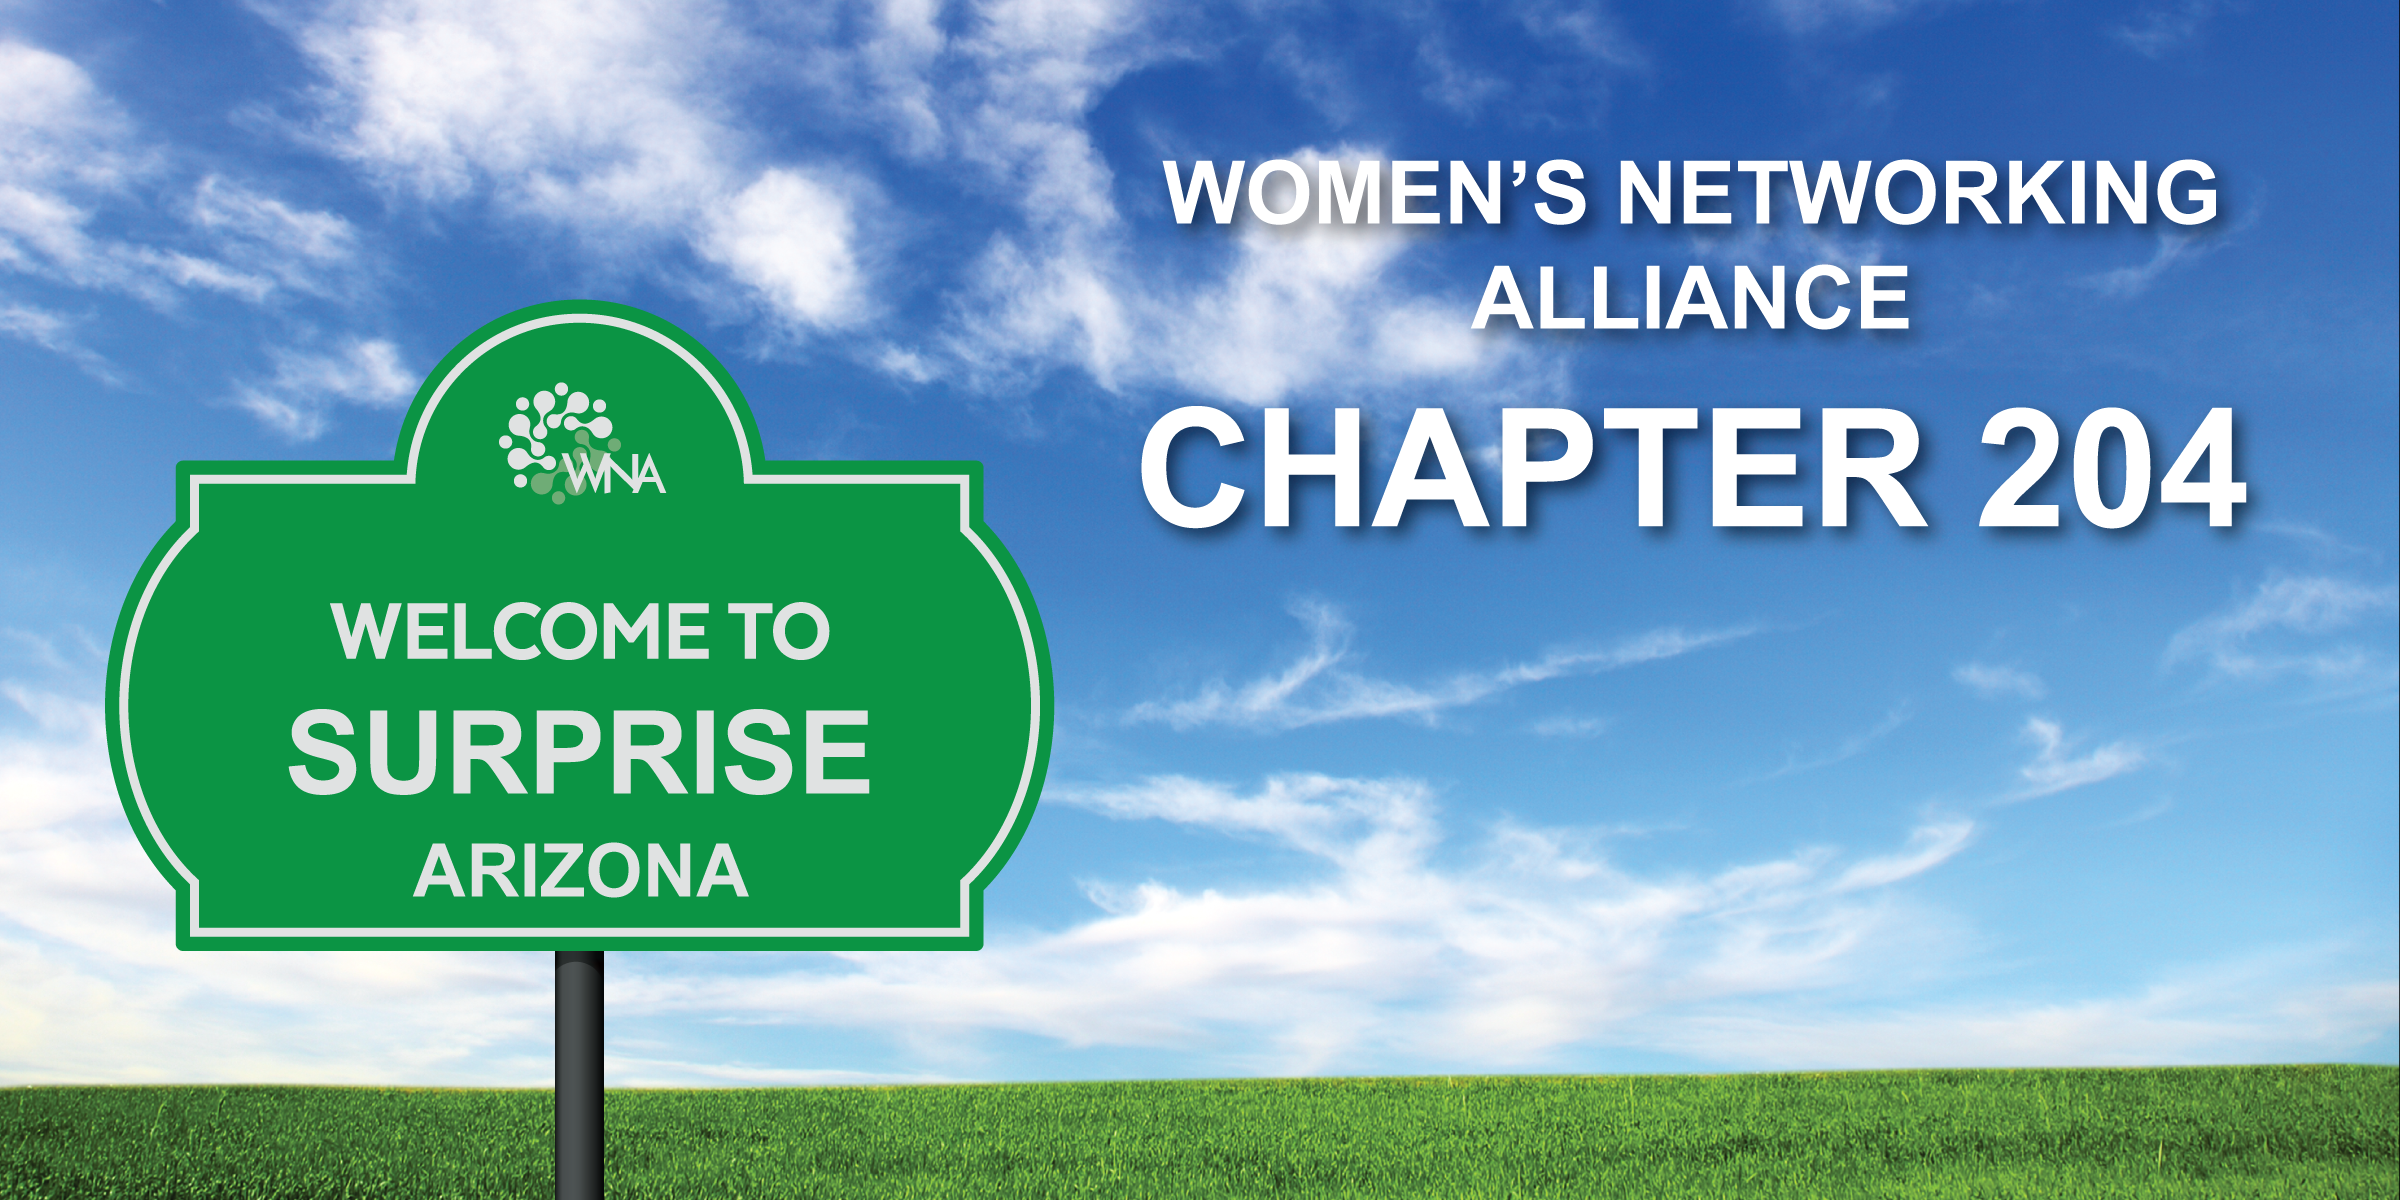 Women's Networking Alliance Ch. 204 Meeting (Surprise, AZ)